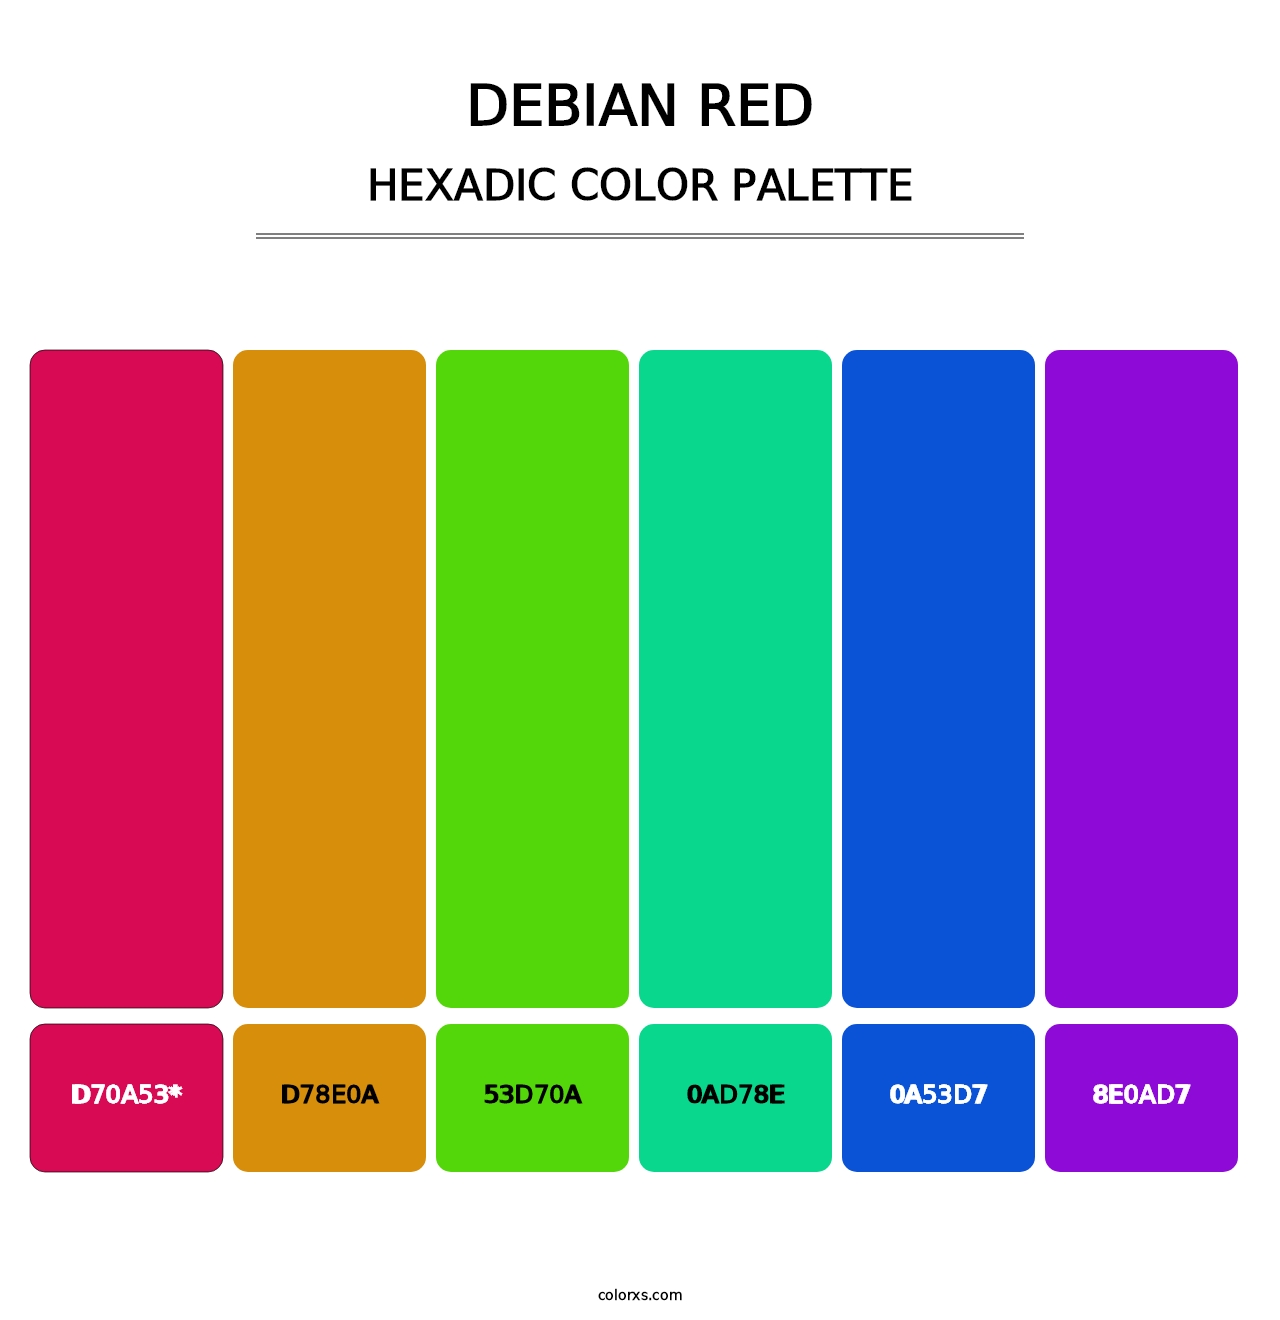 Debian red - Hexadic Color Palette